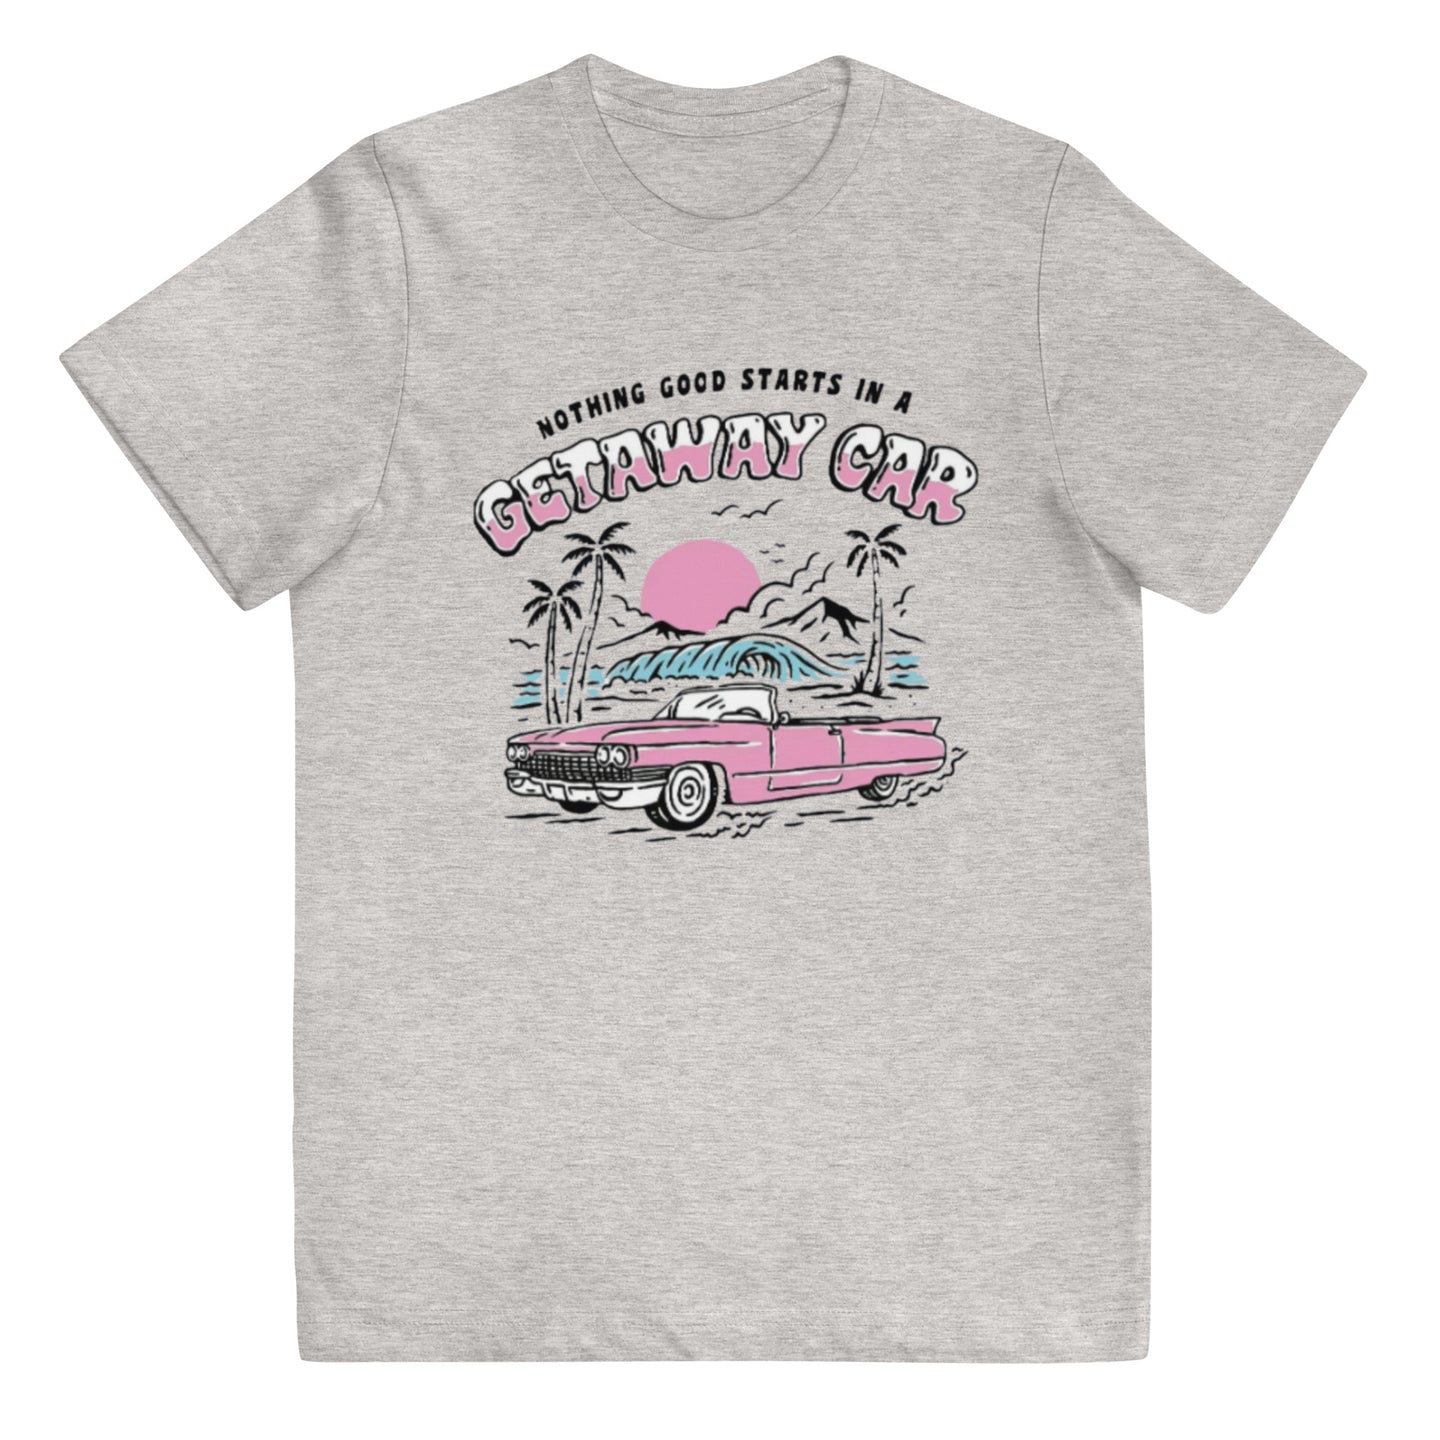 Get away car Youth jersey t-shirt